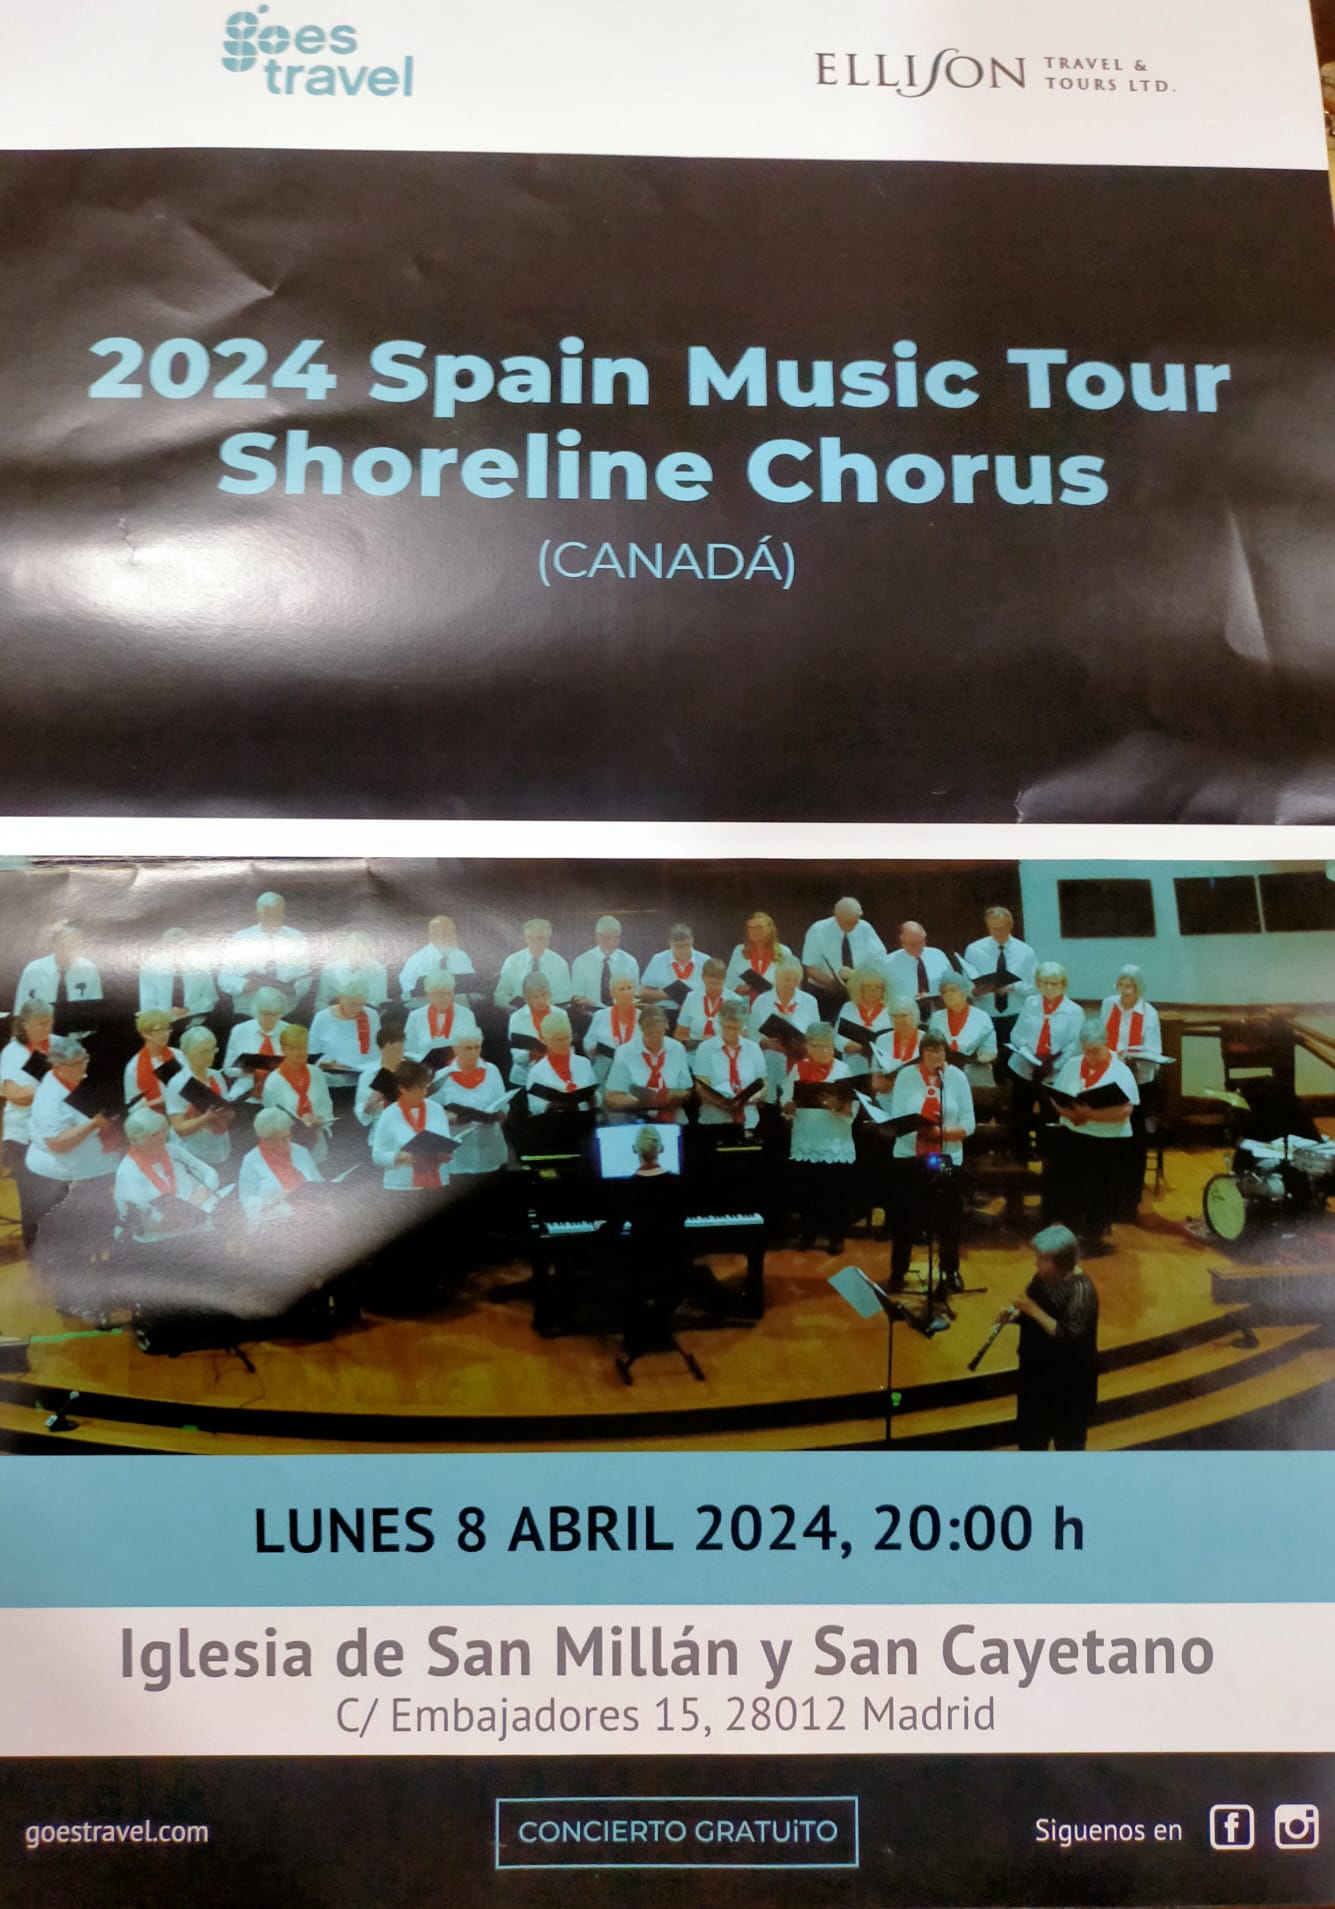 2024-shoreline-chorus-spain-music-tour@pmillancayetano